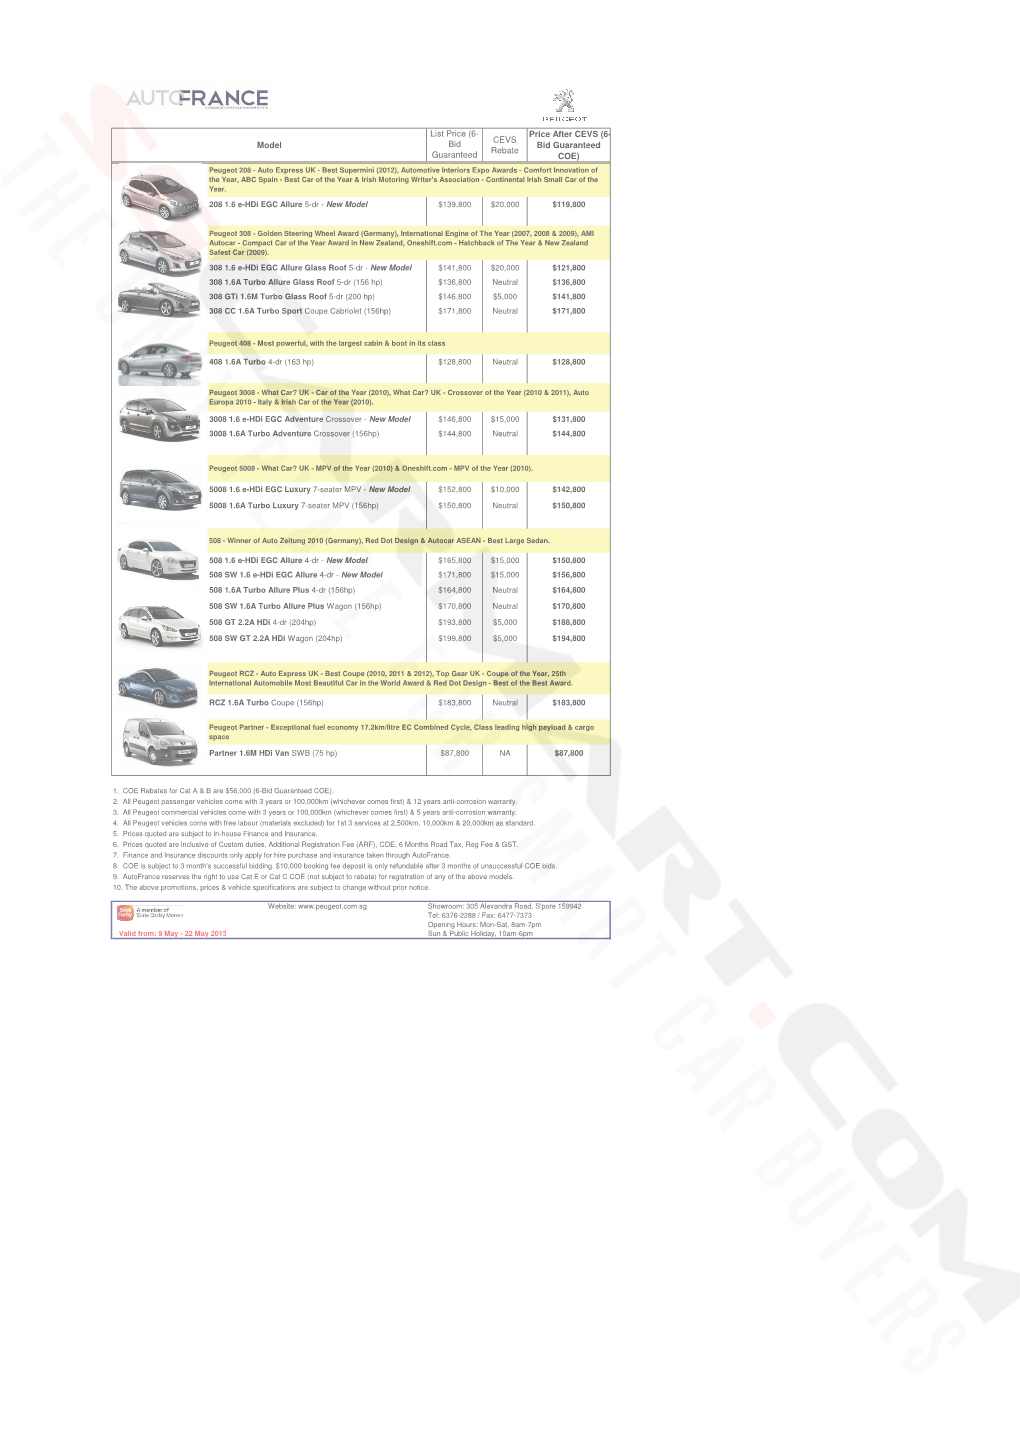 Peugeot Pricelist May 2013 (2013-05-09)